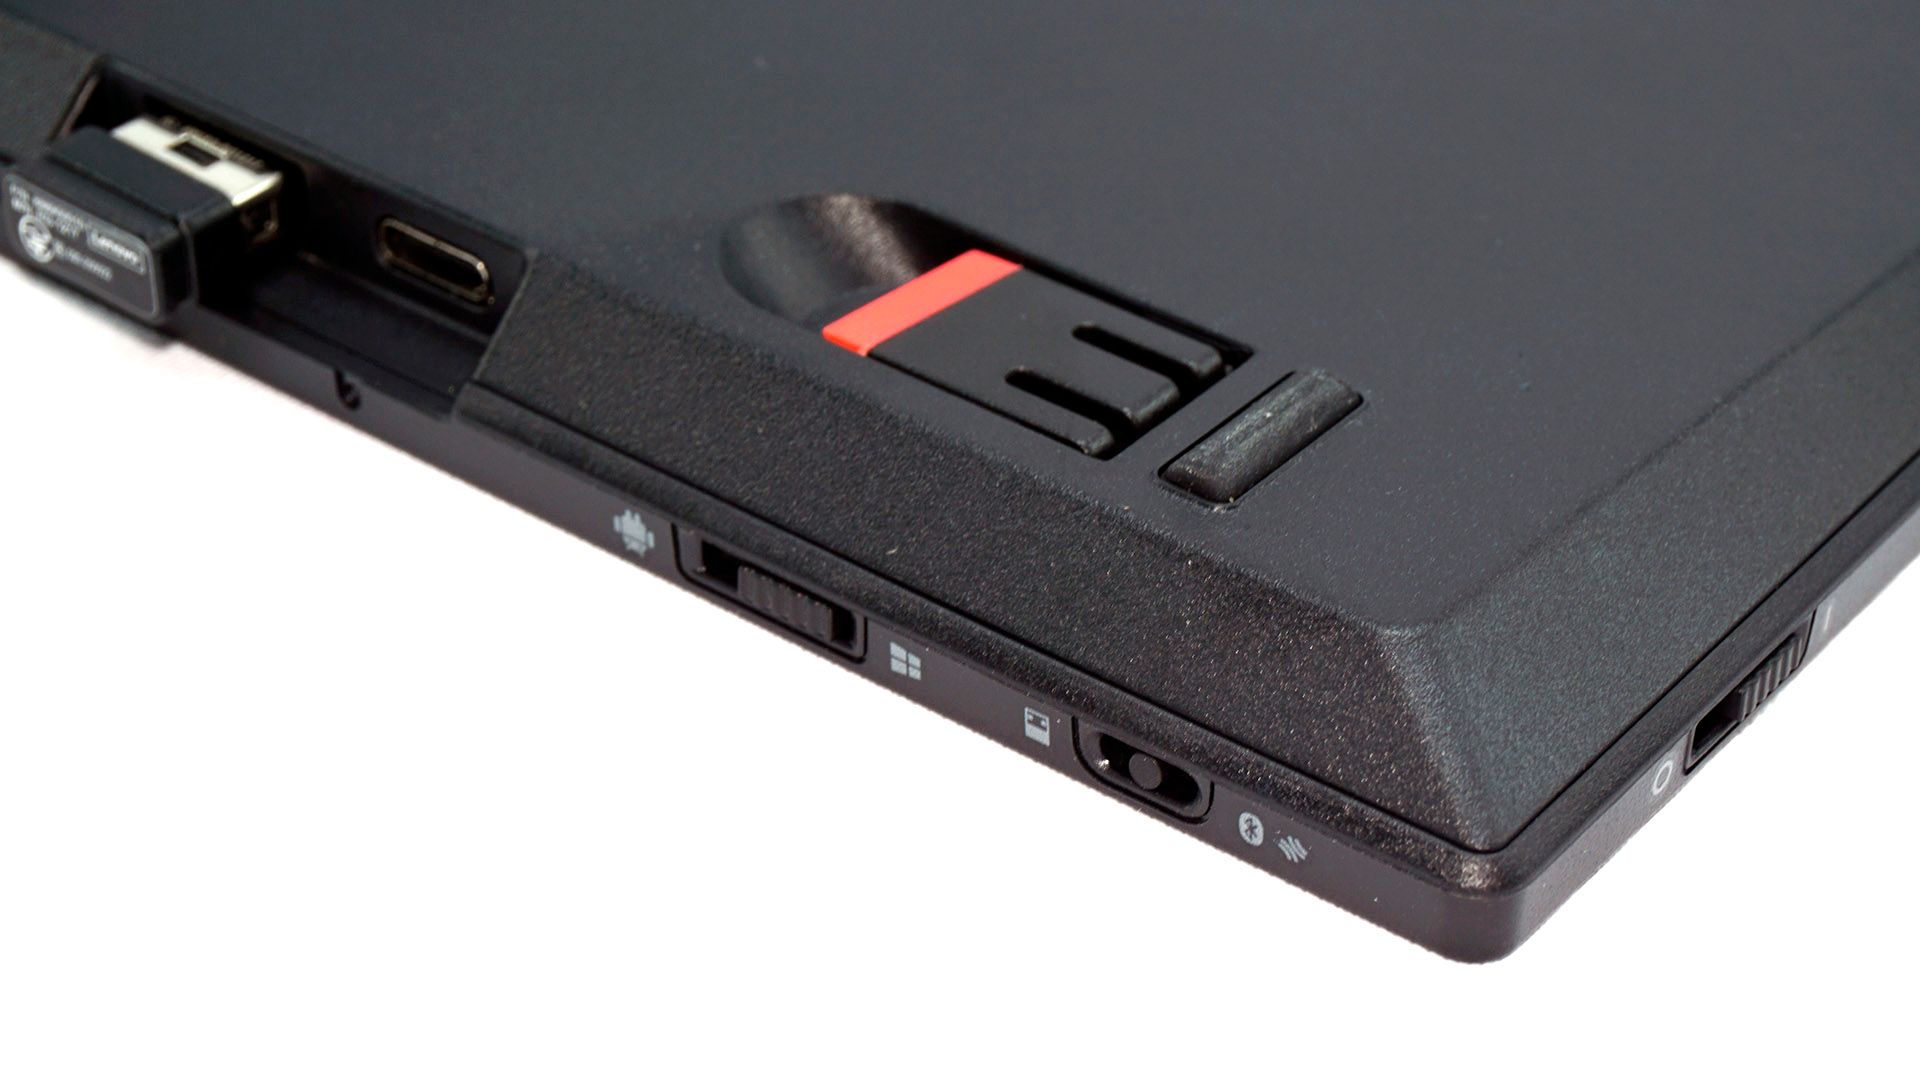 ThinkPad keyboard control buttons, USB-C port, and leg